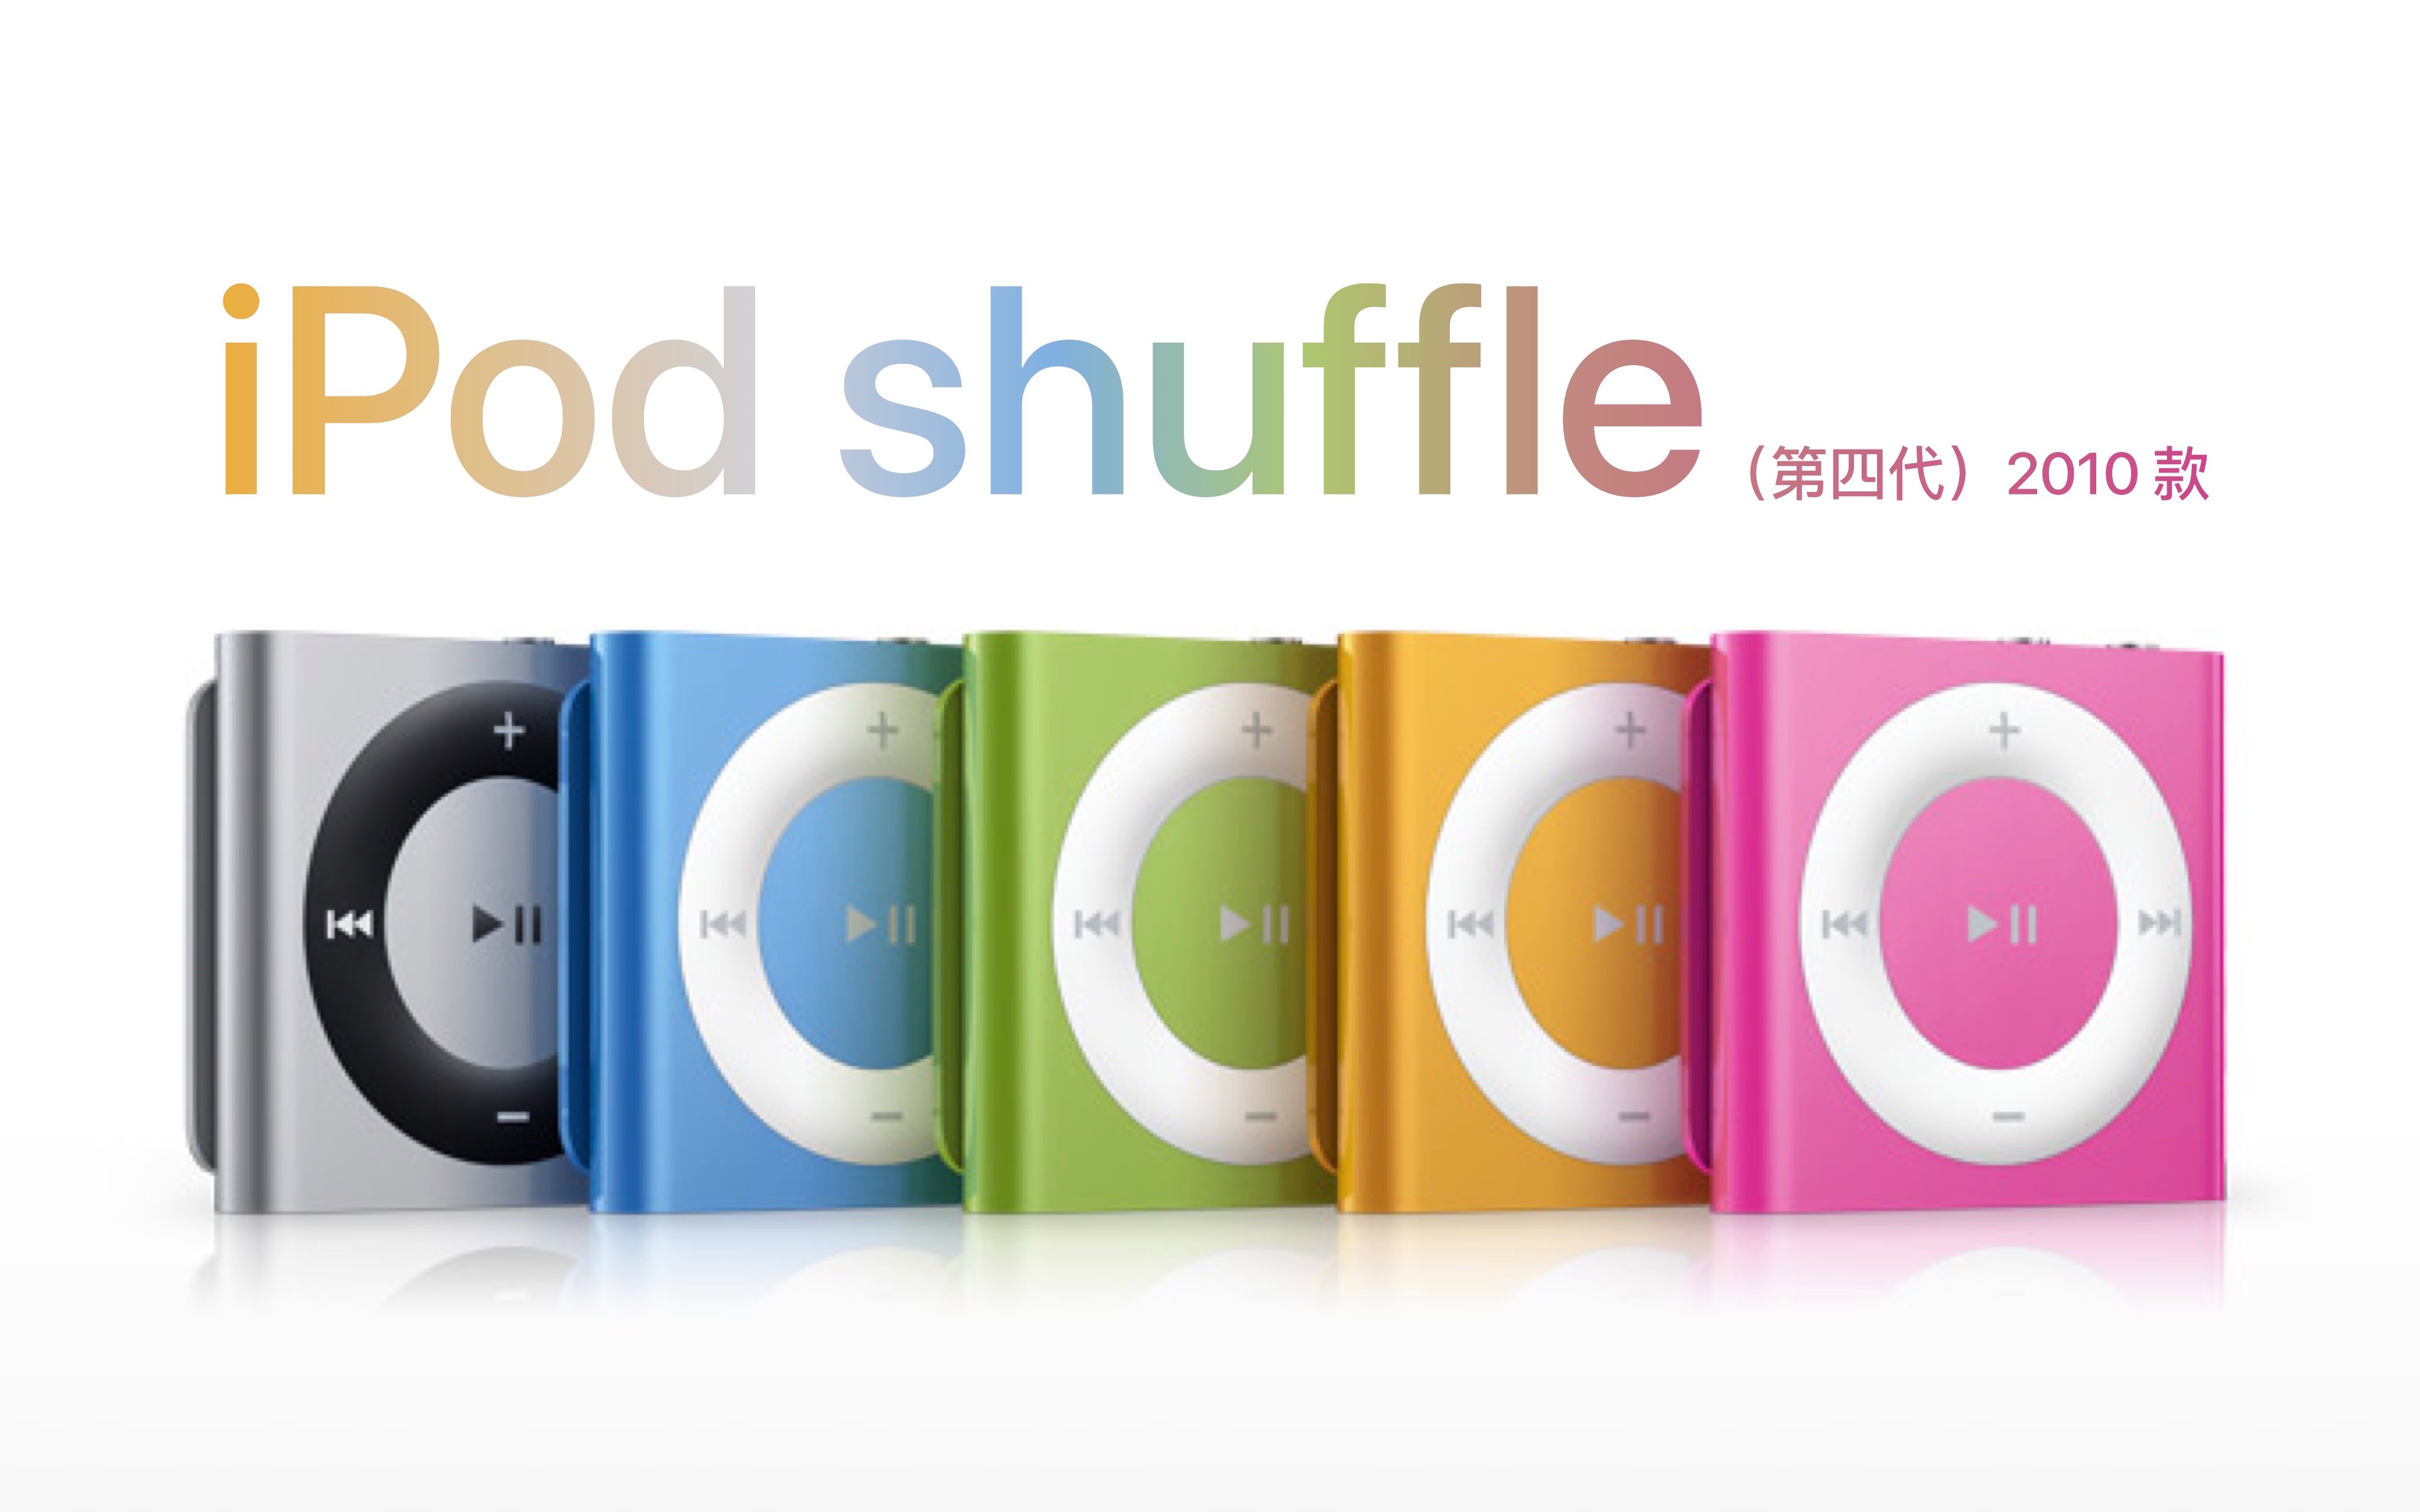 iPod shuffle（第 4 代）2010款